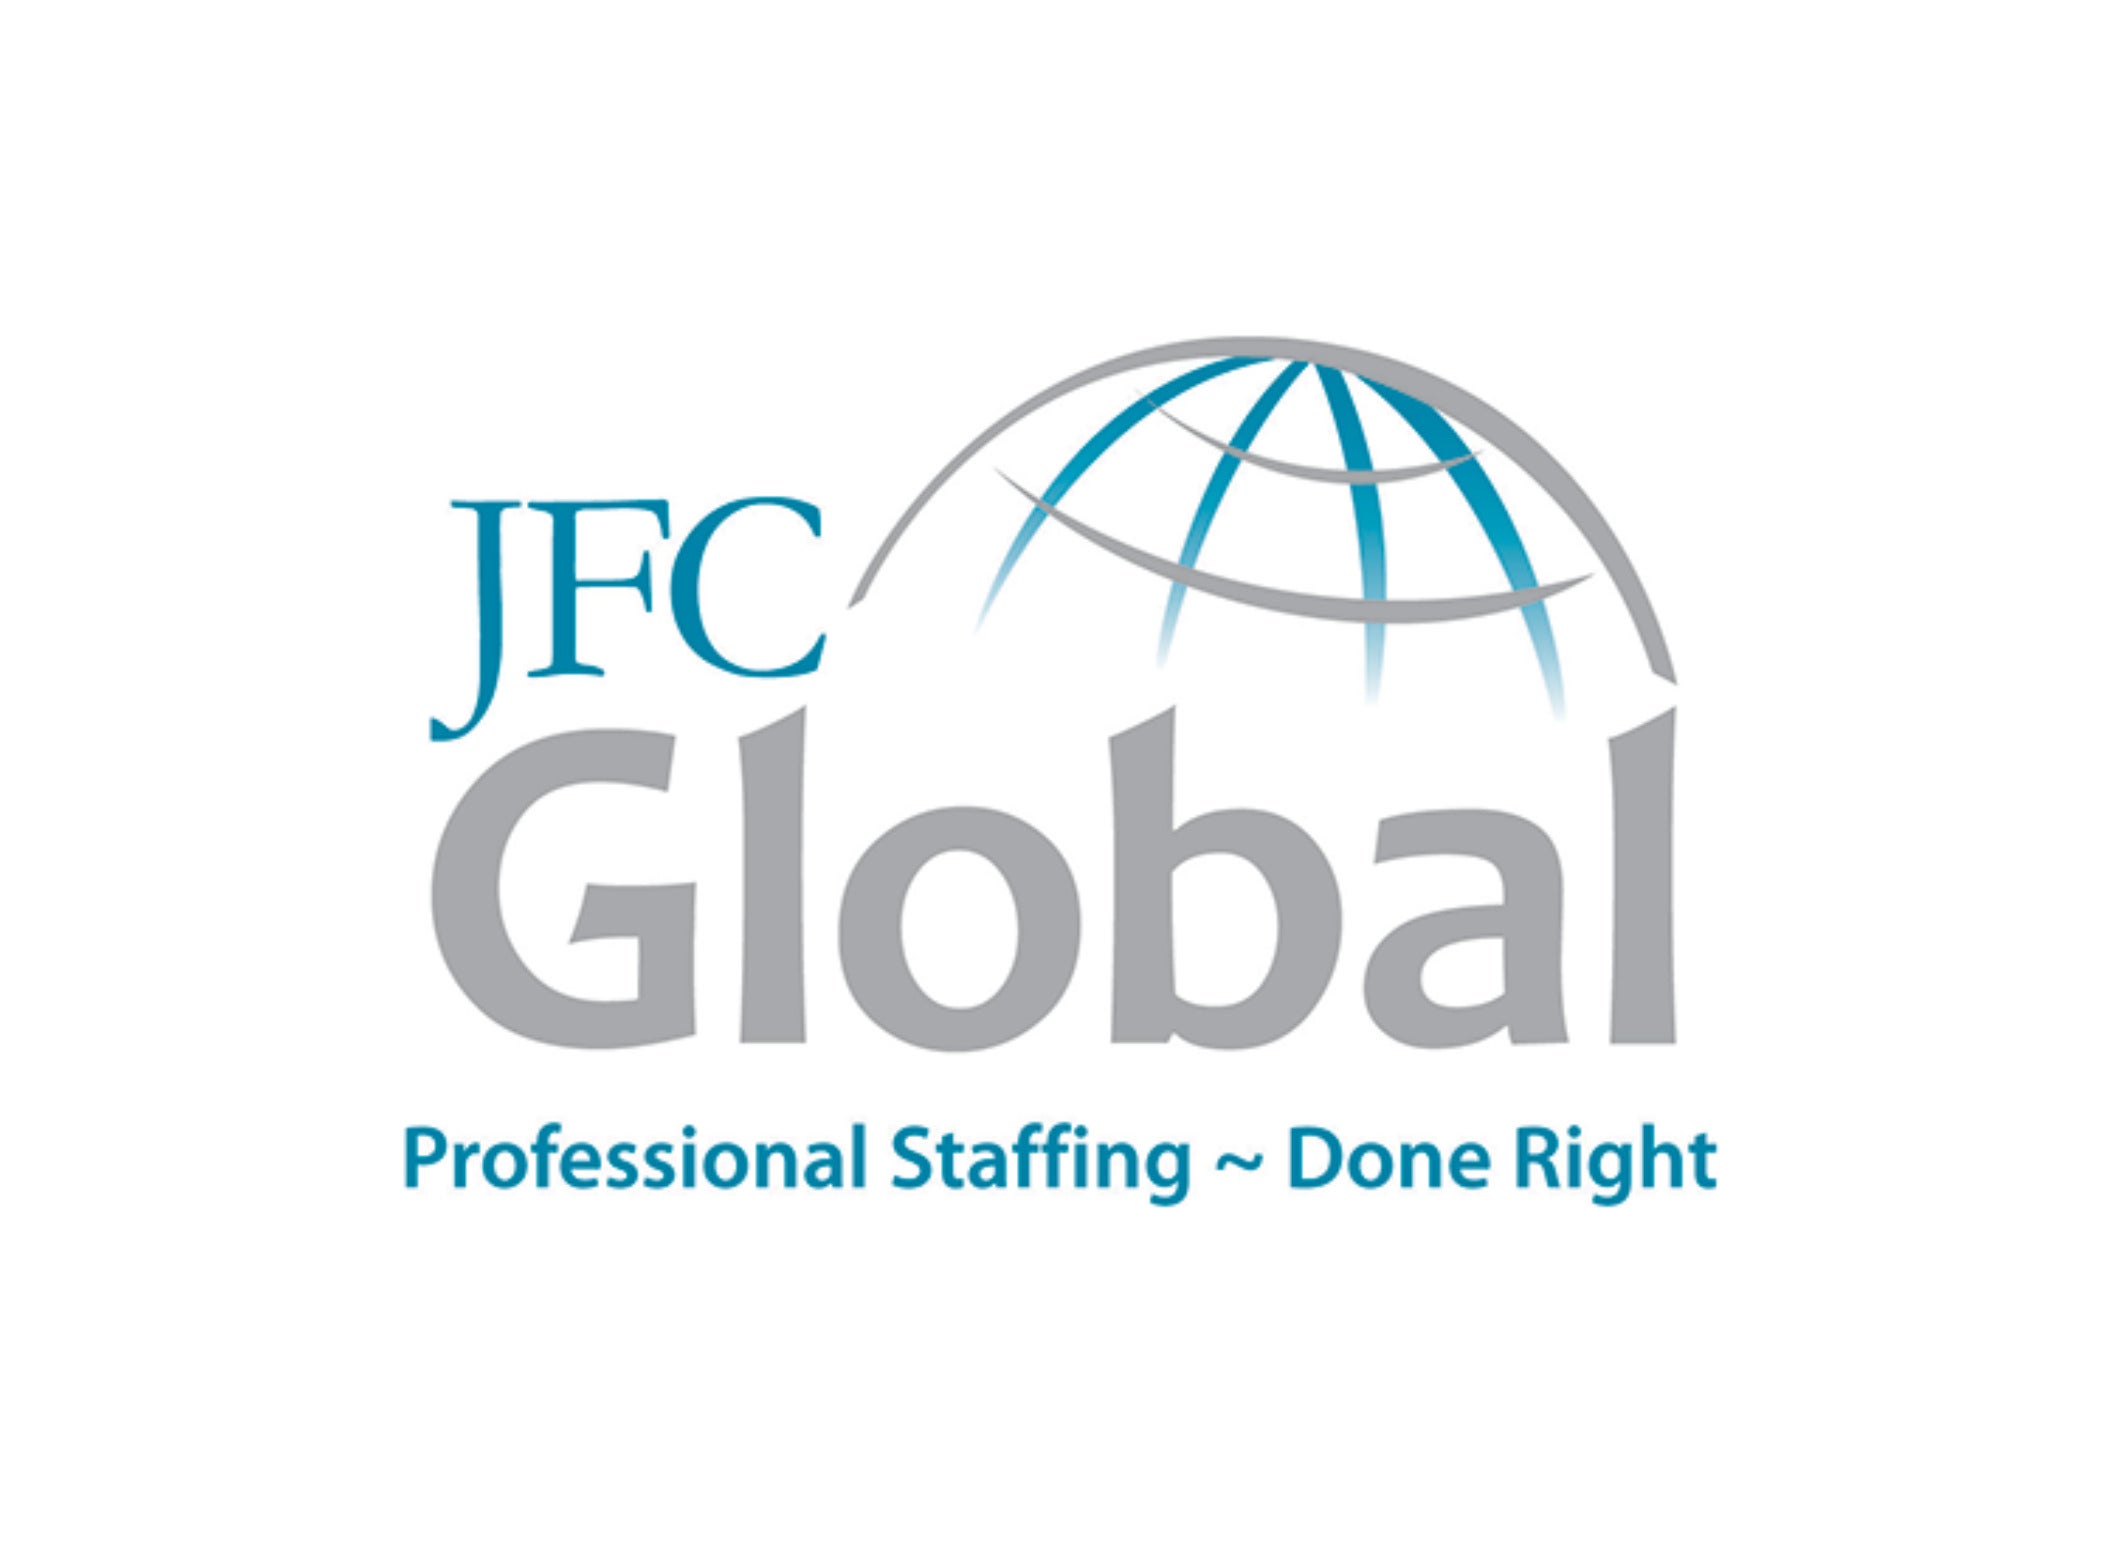 JFC Global logo